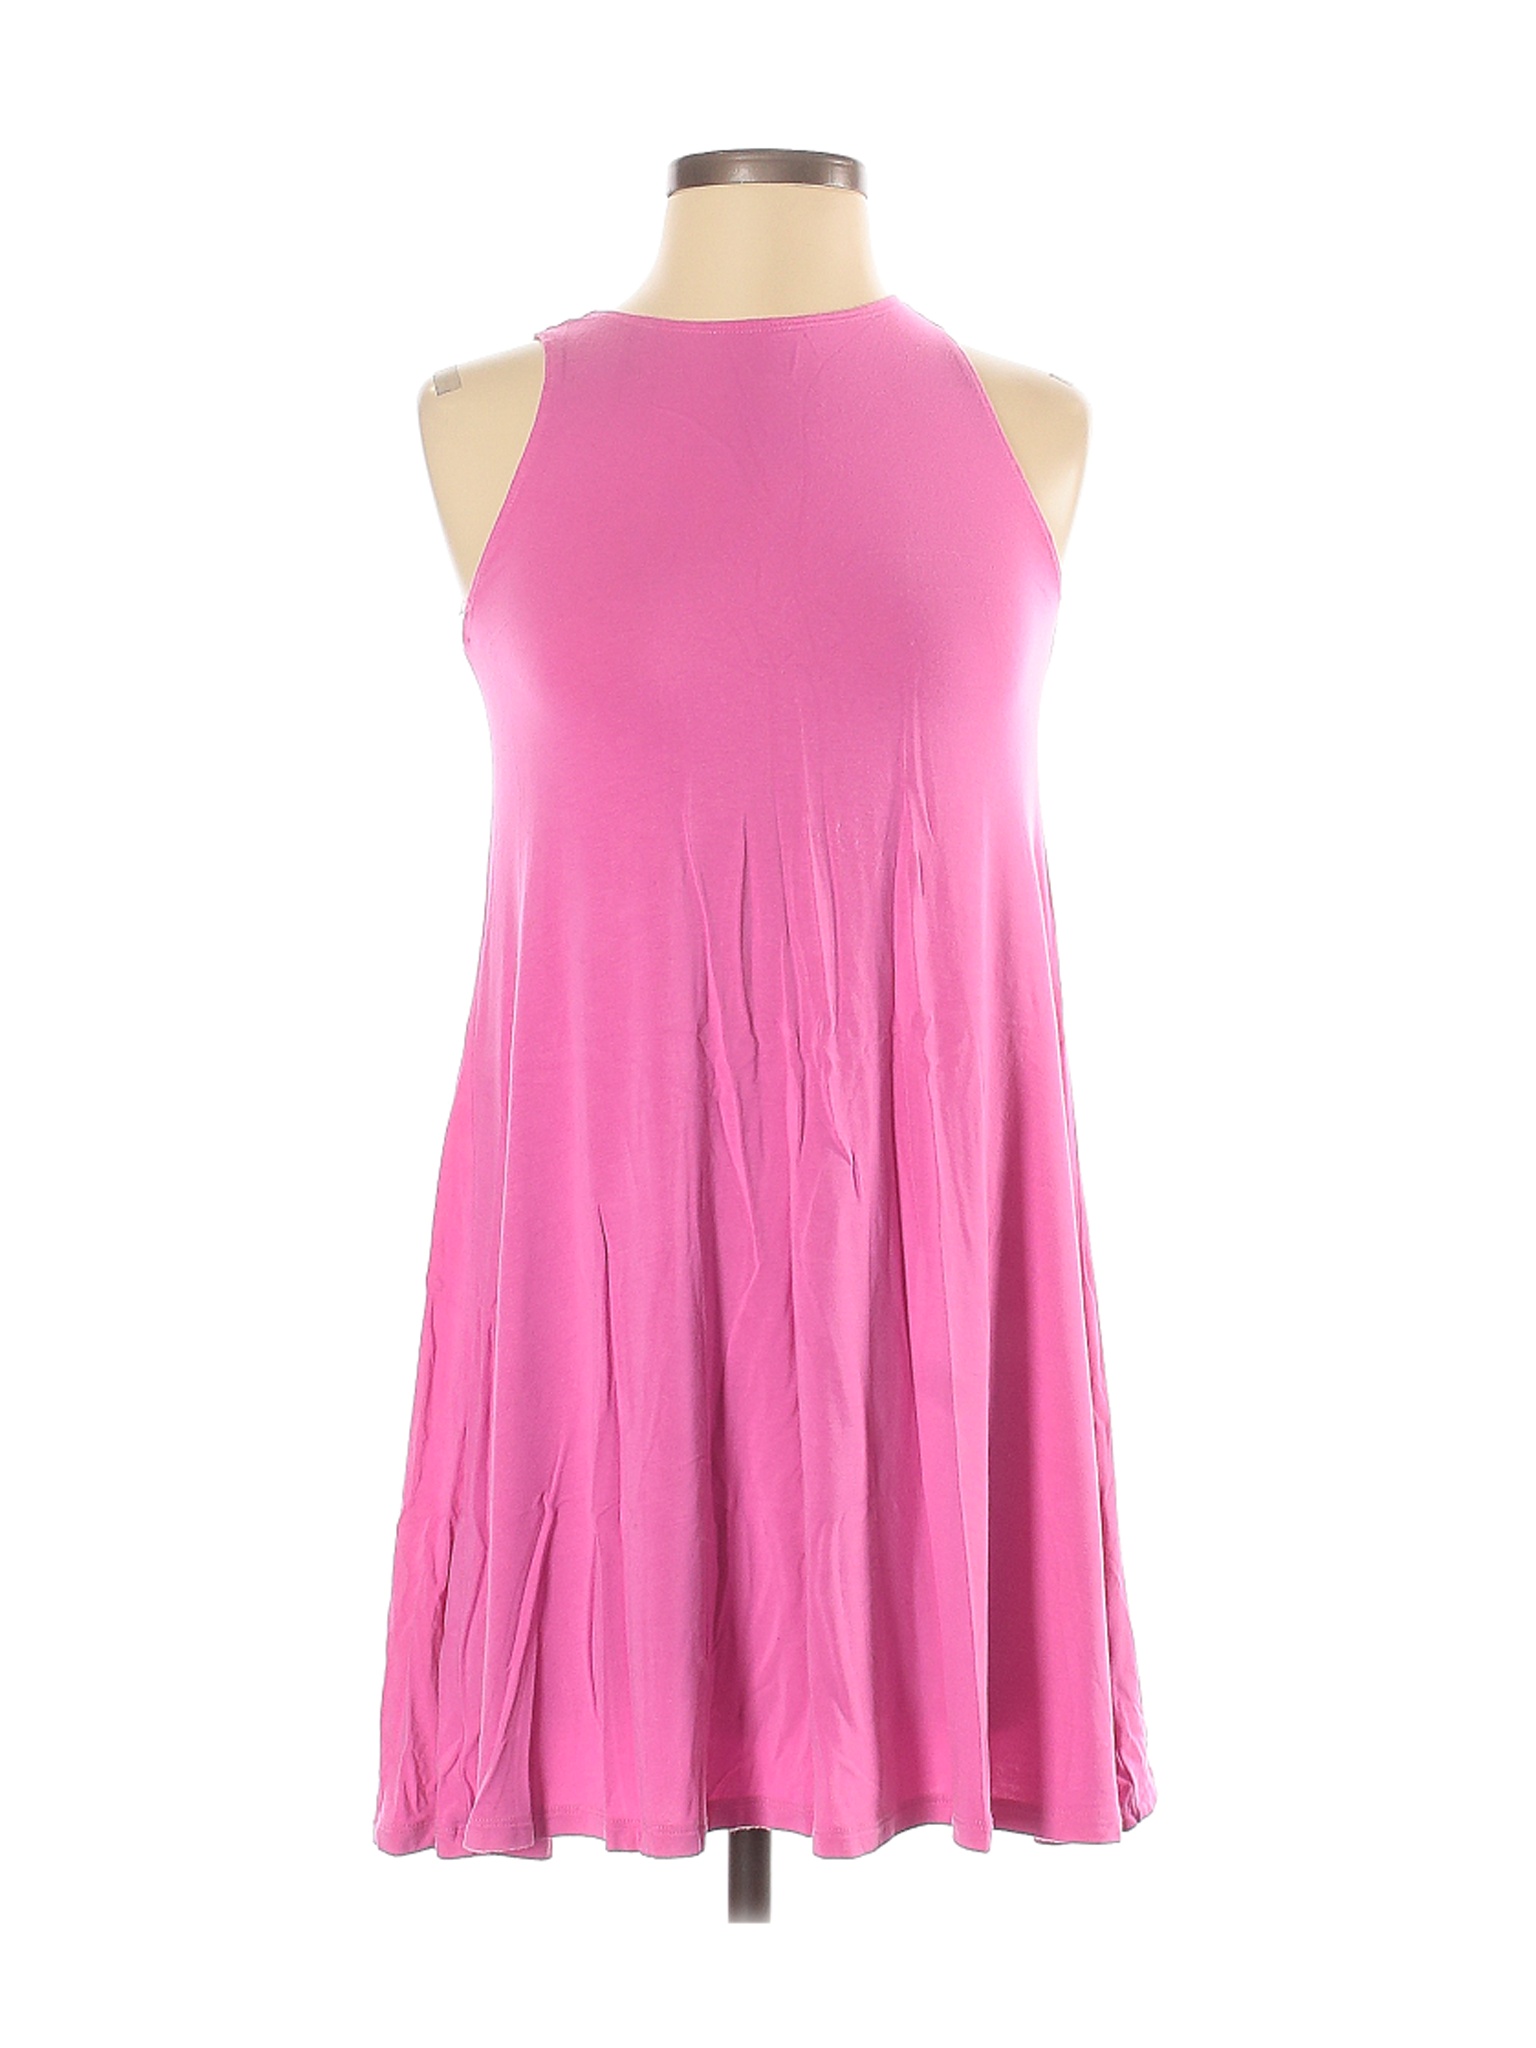 Old Navy Women Pink Casual Dress XS Petites | eBay